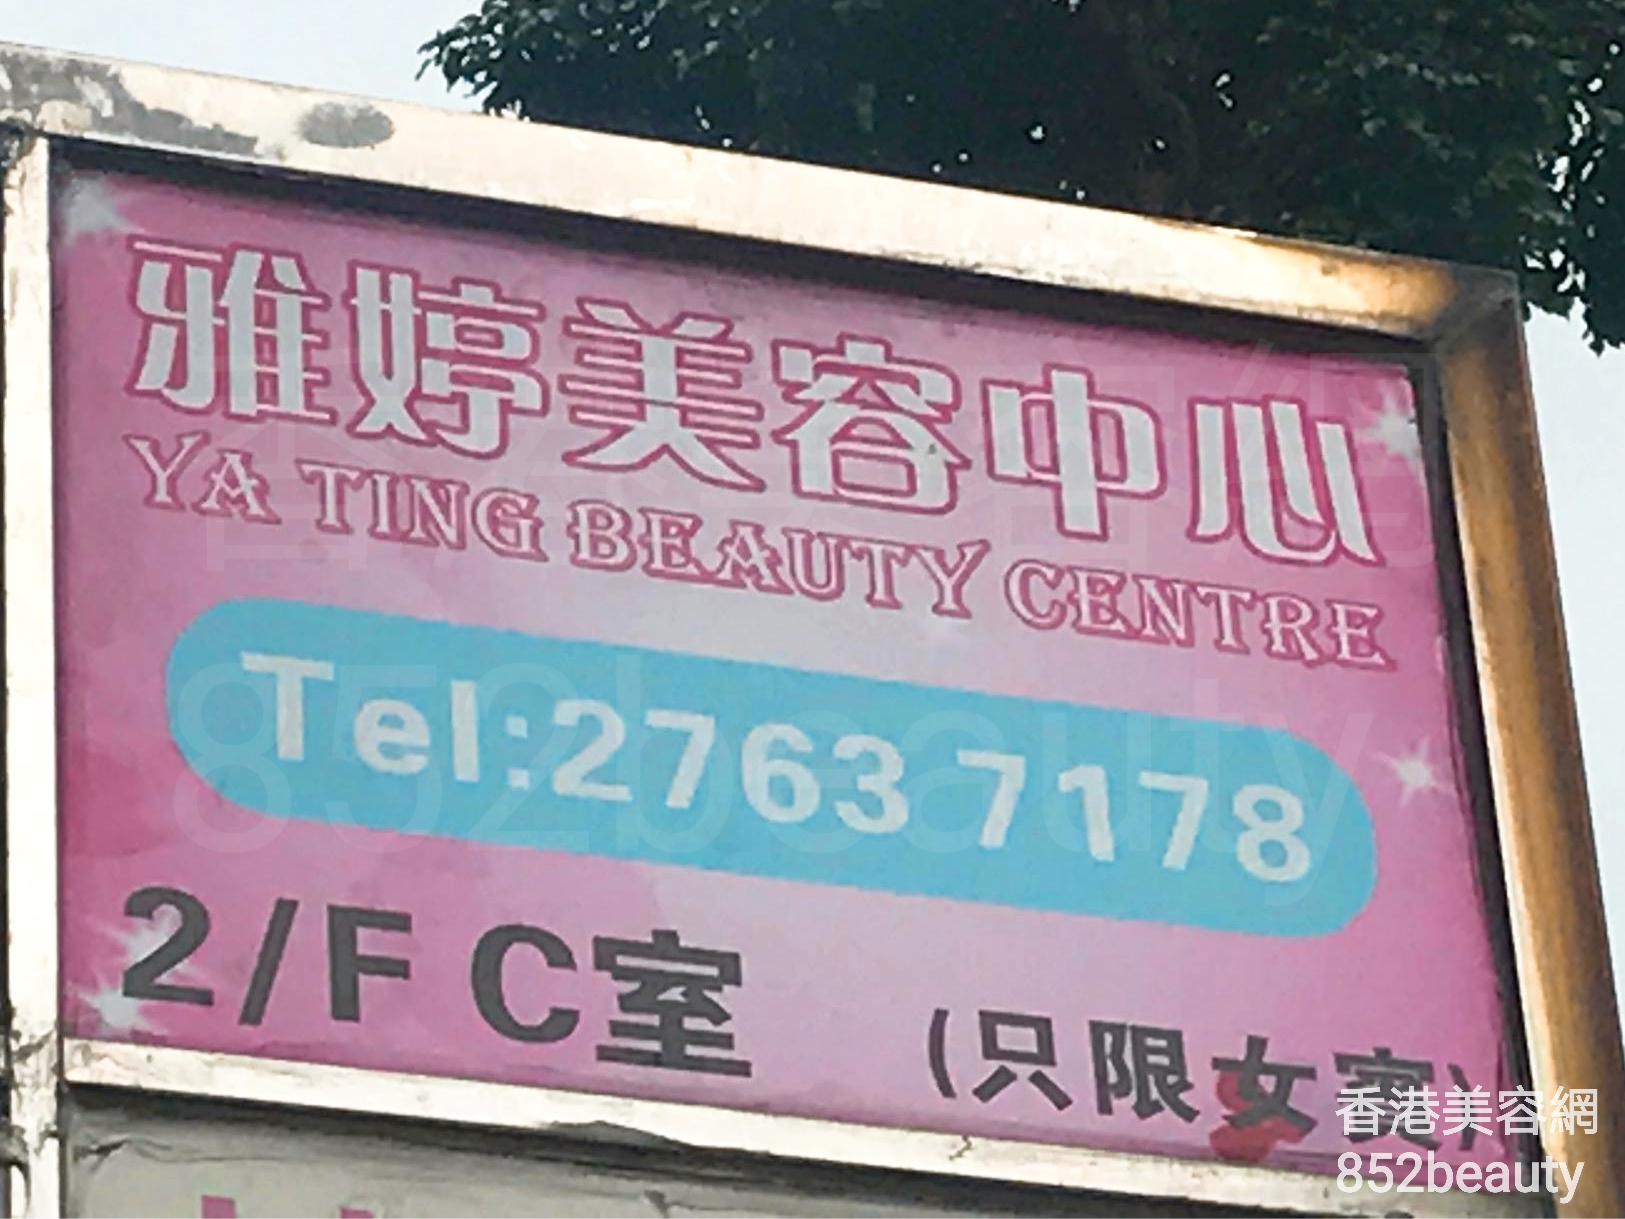 Eye Care: 雅婷美容中心 Ya Ting Beauty Centre